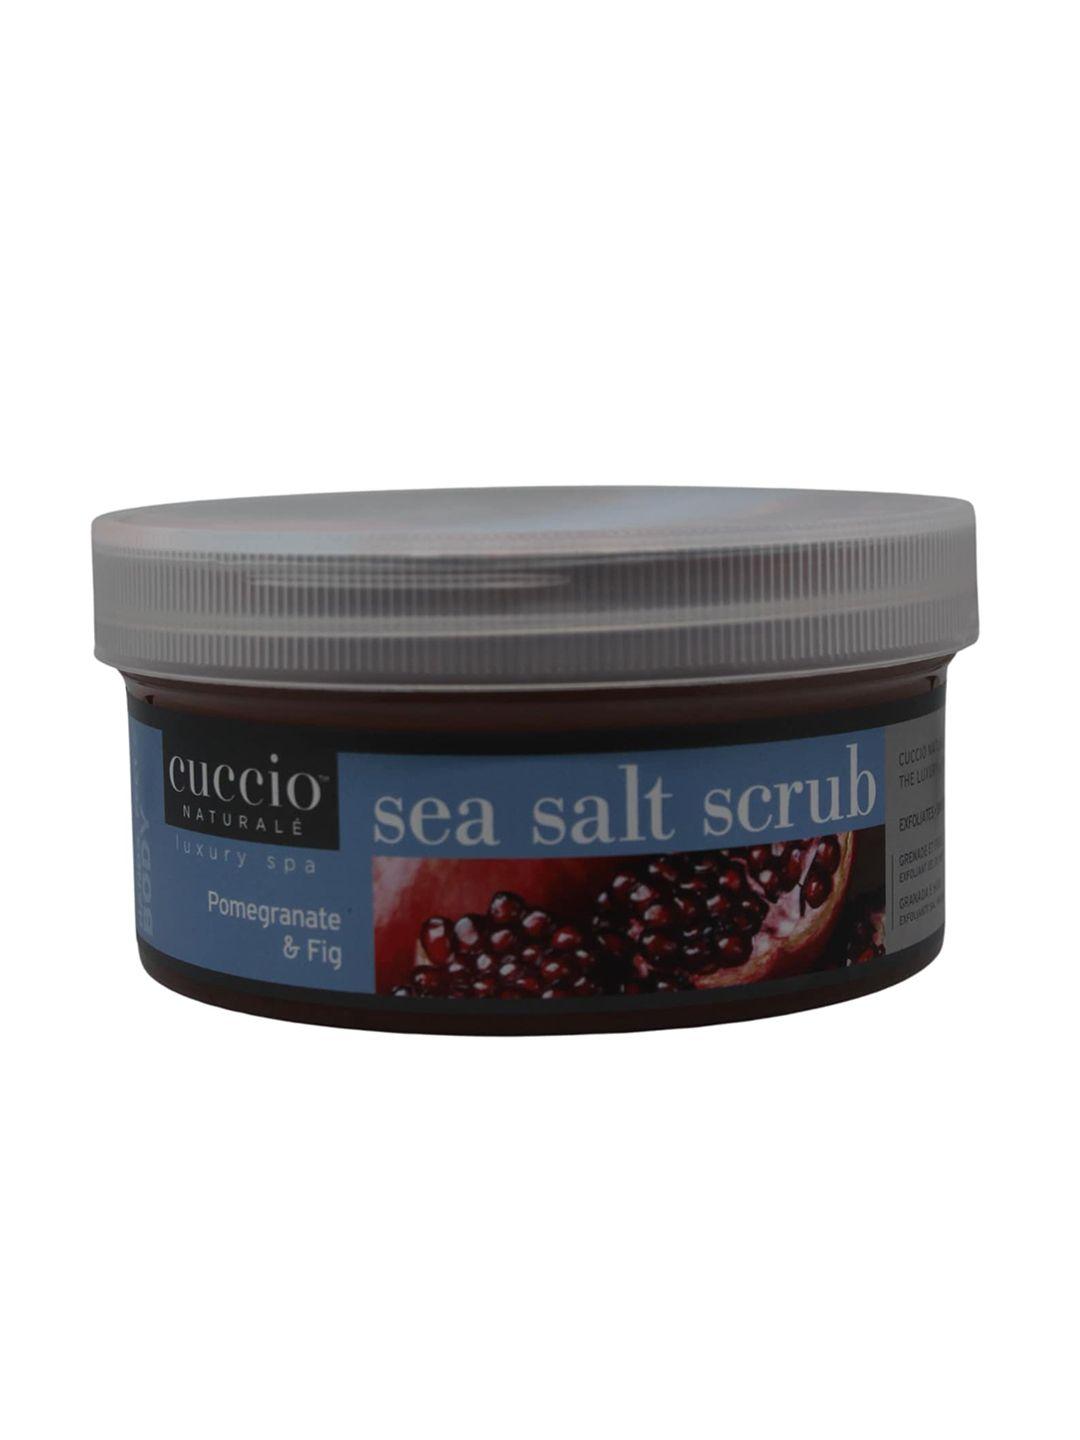 cuccio pomergranate & fig sea salt scrub 553gm